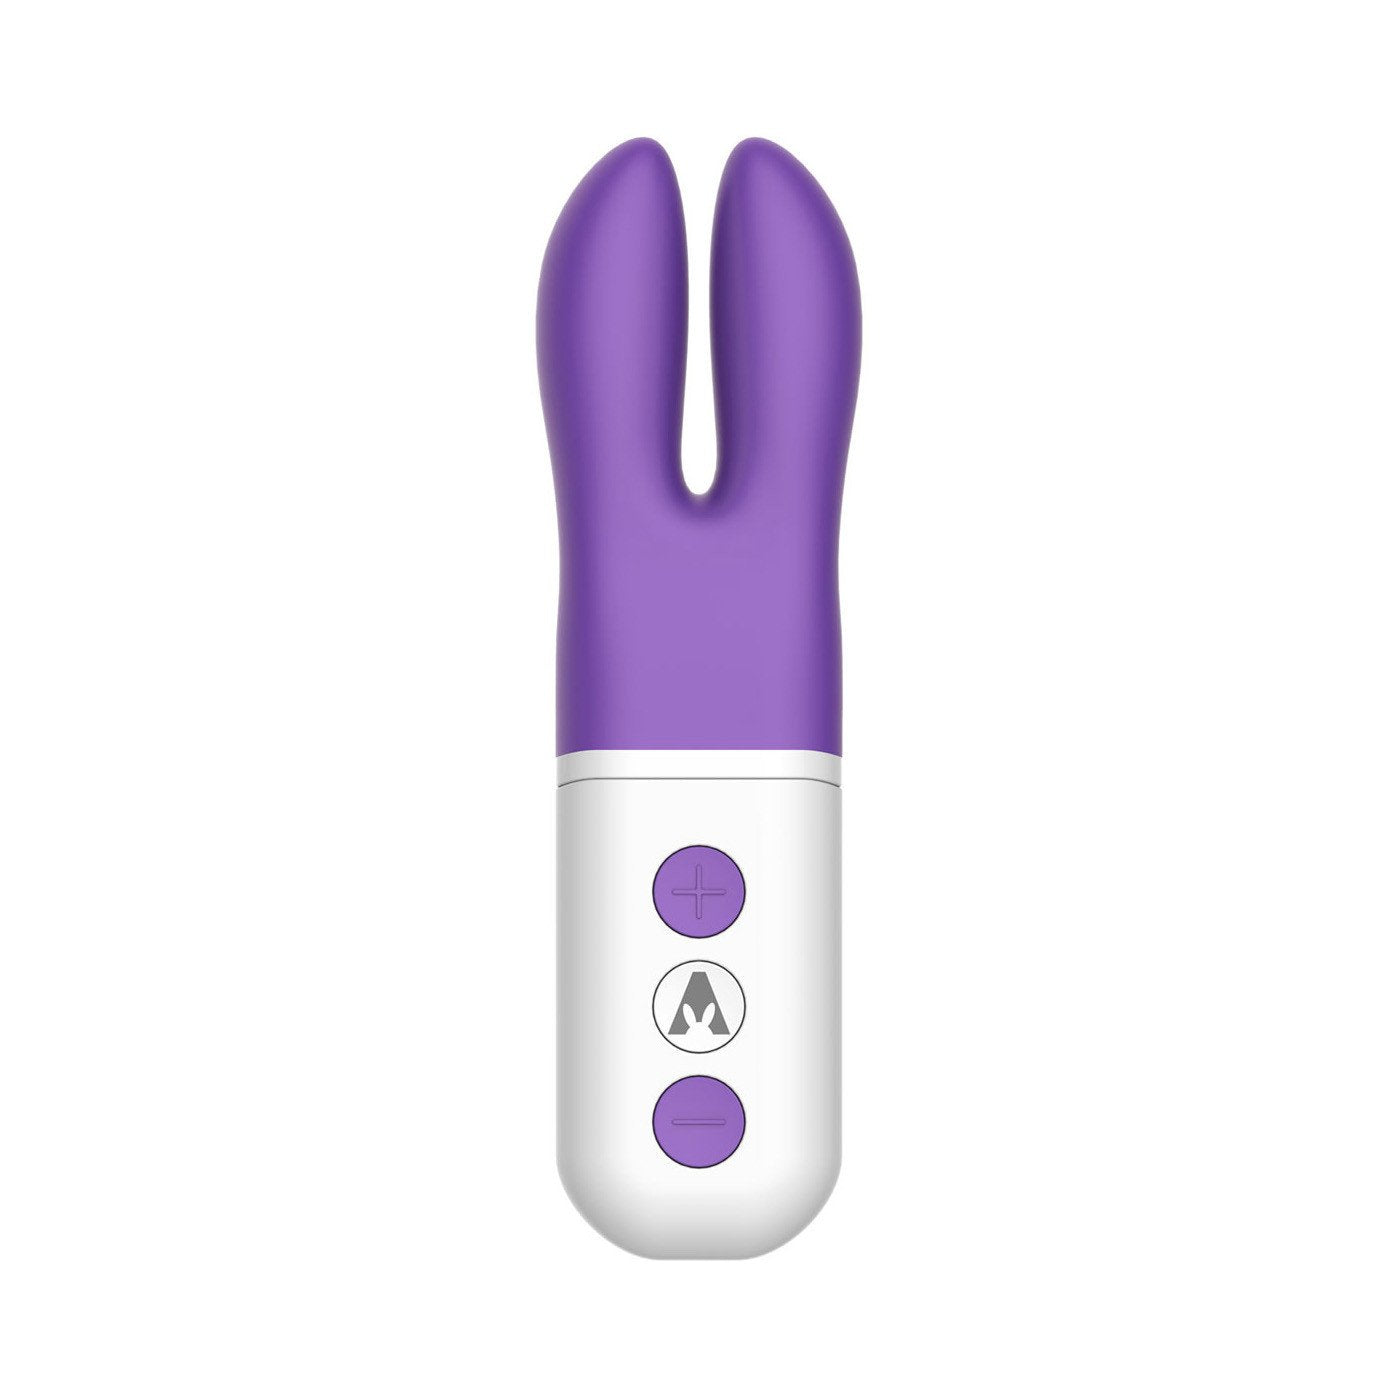 The Rabbit Company - The Pocket Rabbit Vibrator (Purple) - PleasureHobby